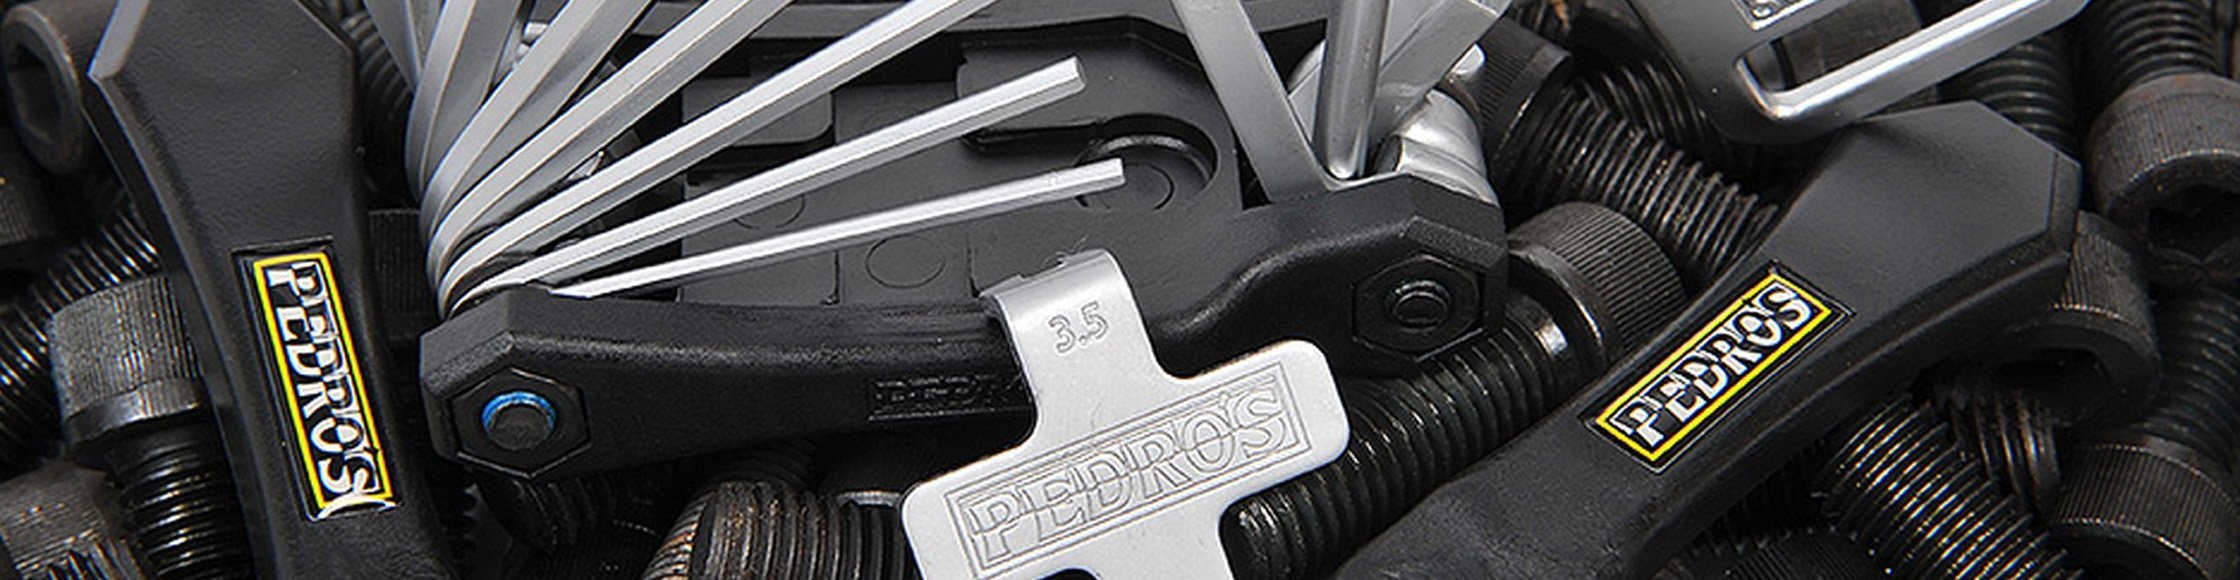 Pedros Fahrrad Werkzeug.jpg